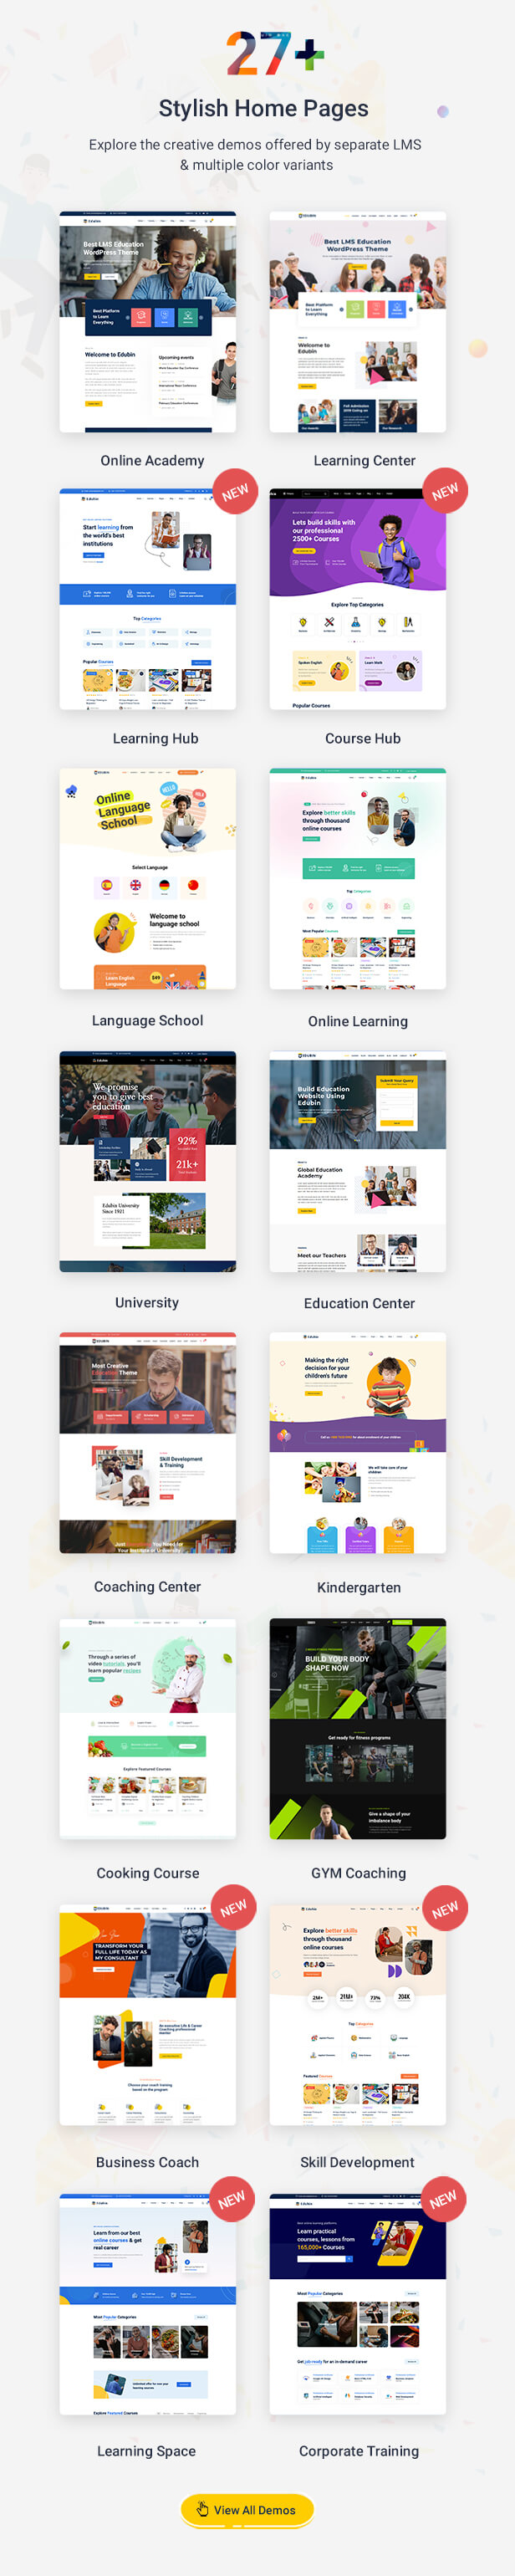 Education WordPress Theme Home Pages| Edubin